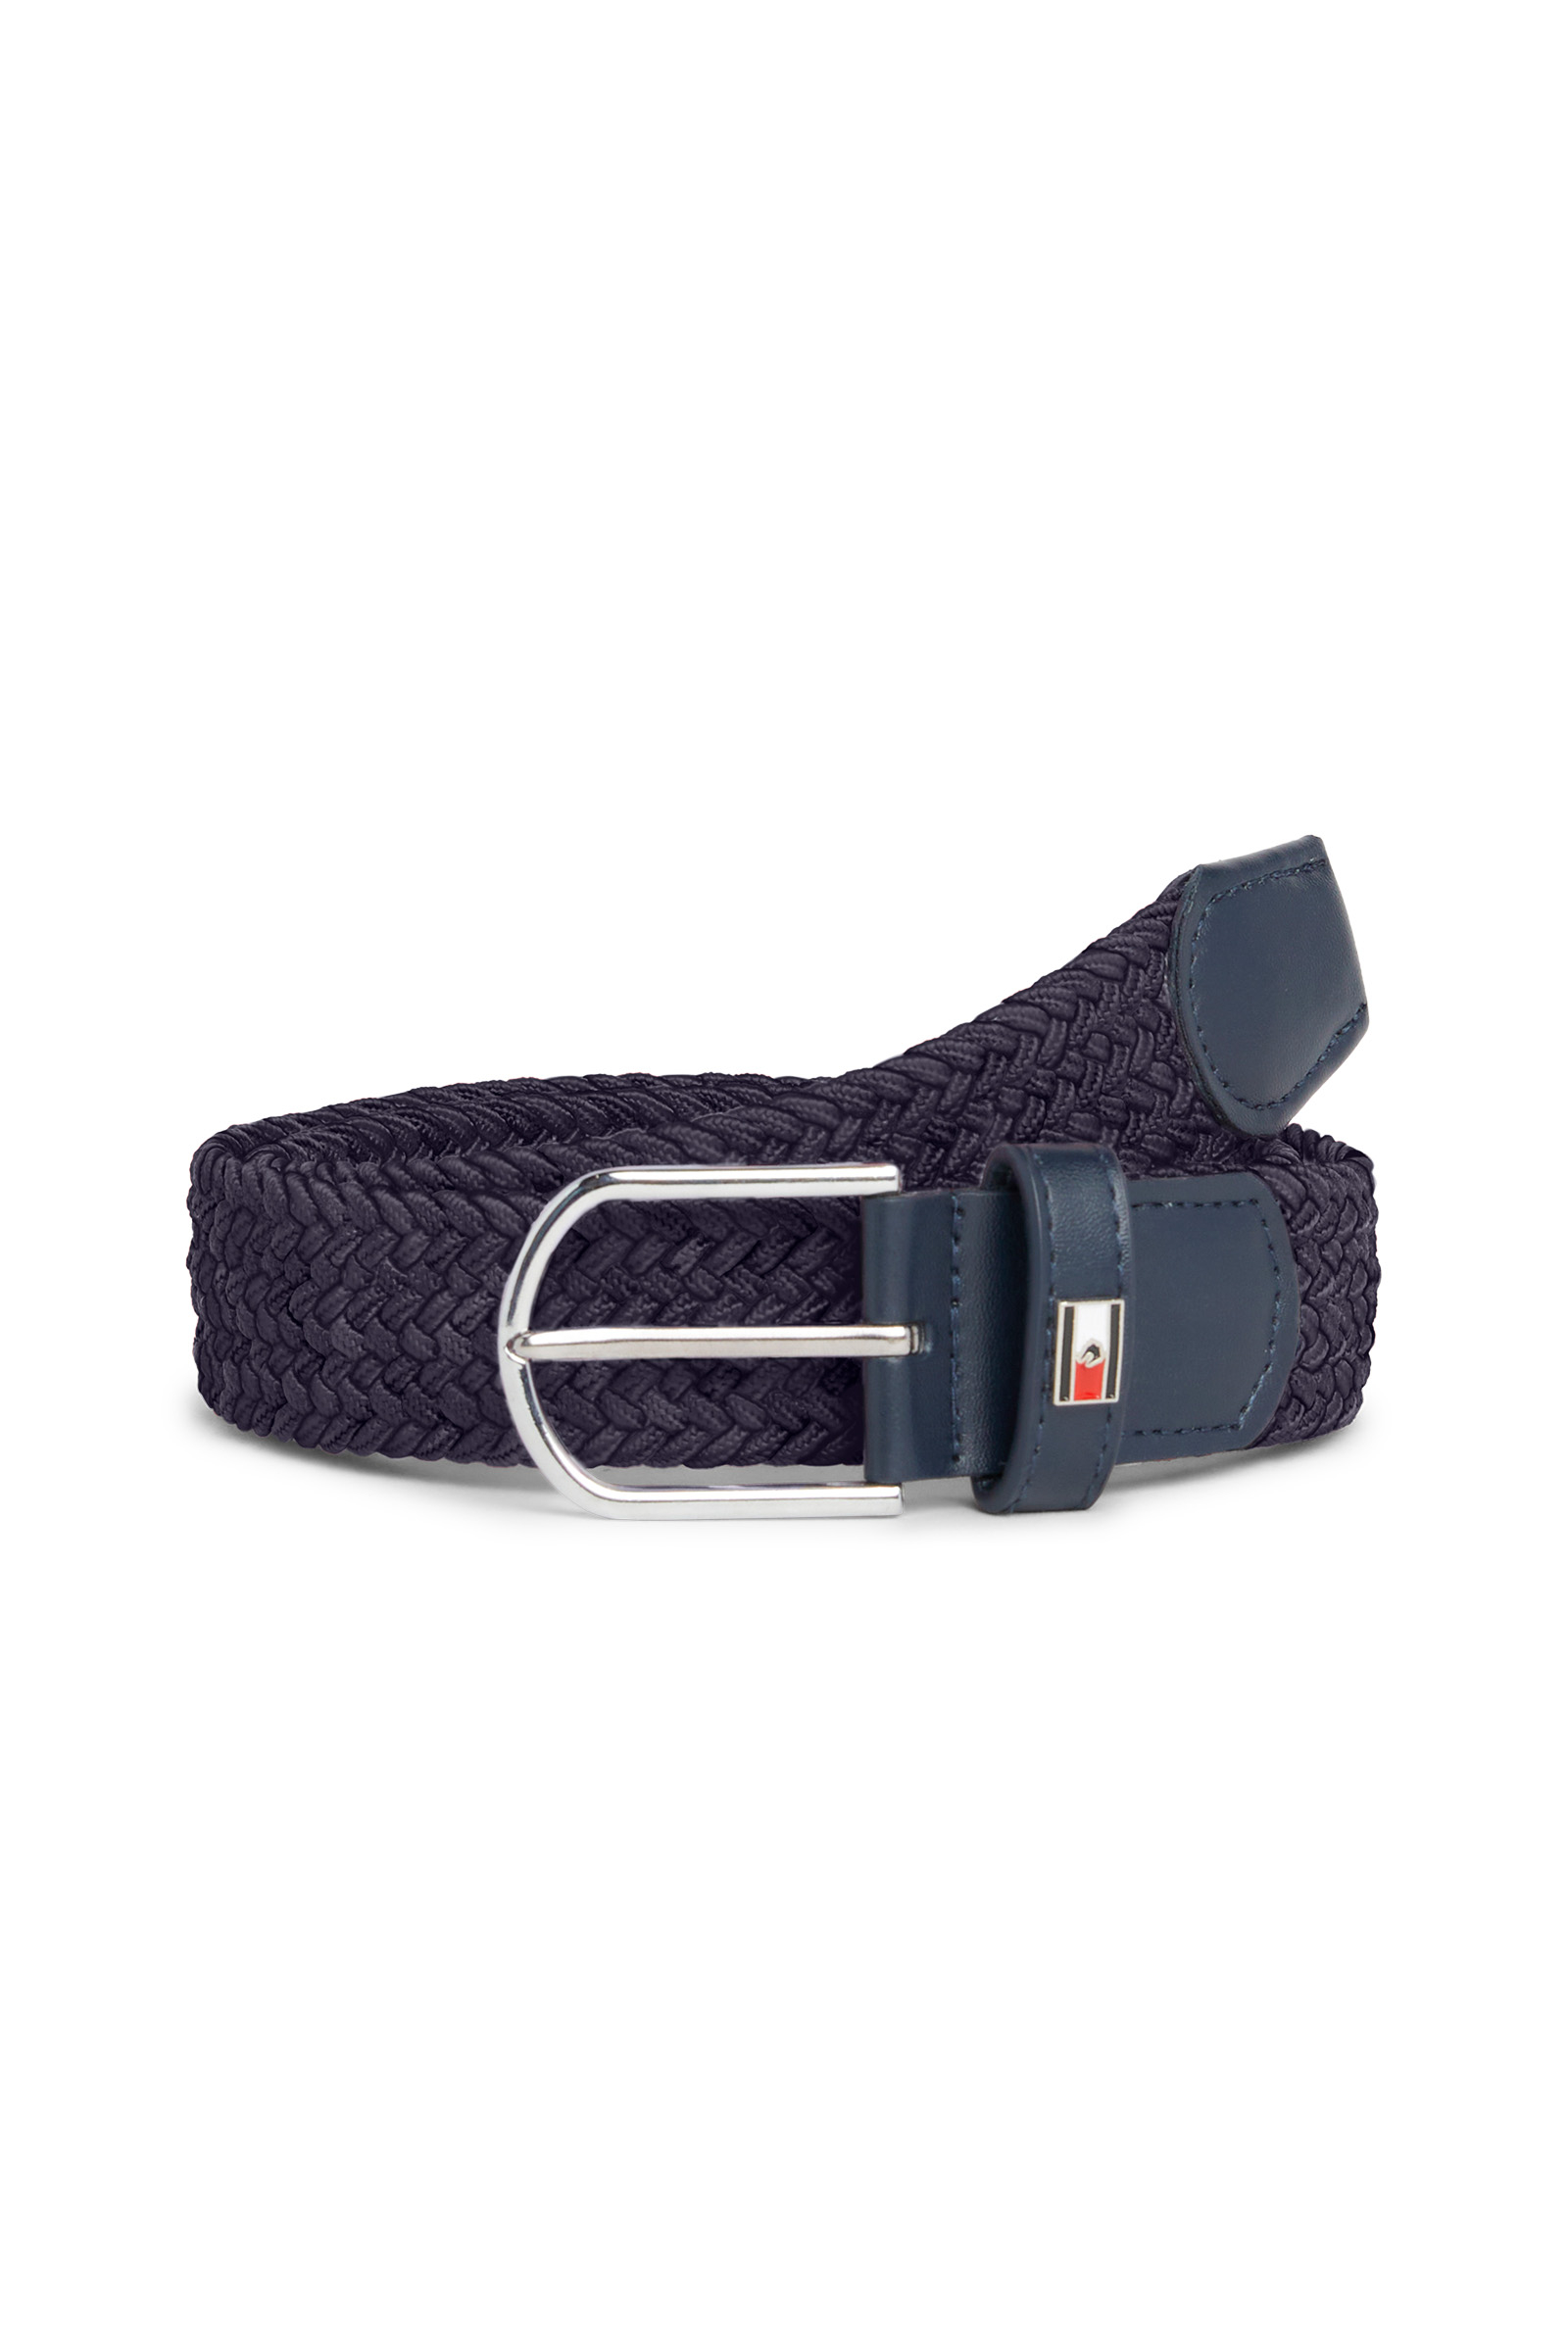 New Tommy Hilfiger Boys Comfort Flex Stretch Braided Belt Sz M (26